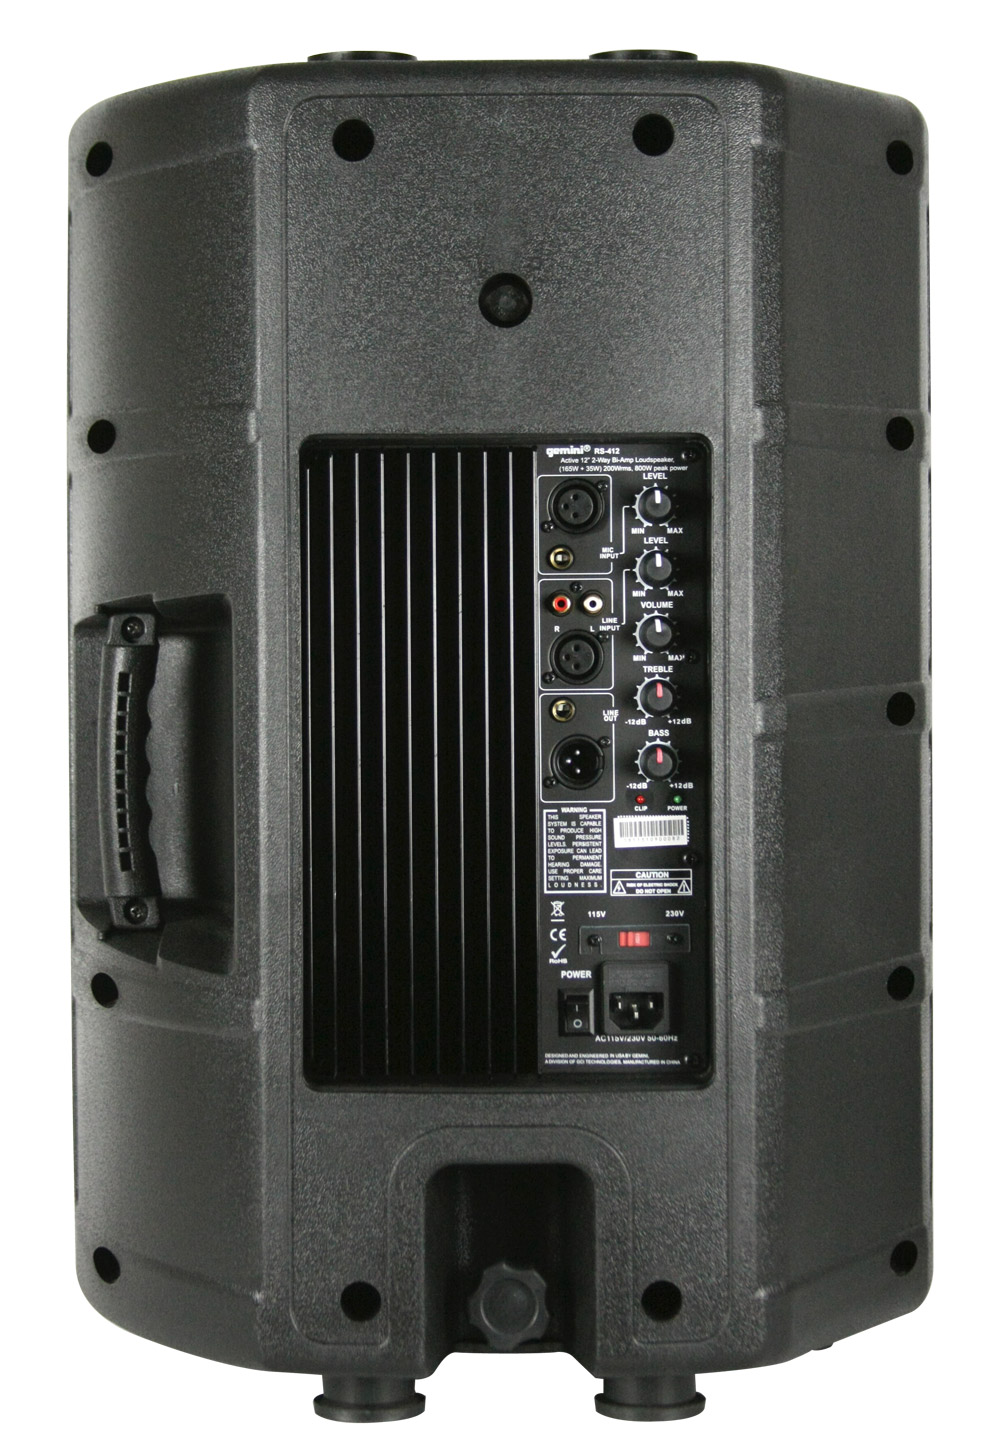 Gemini RS-412 640W Active Speaker Back